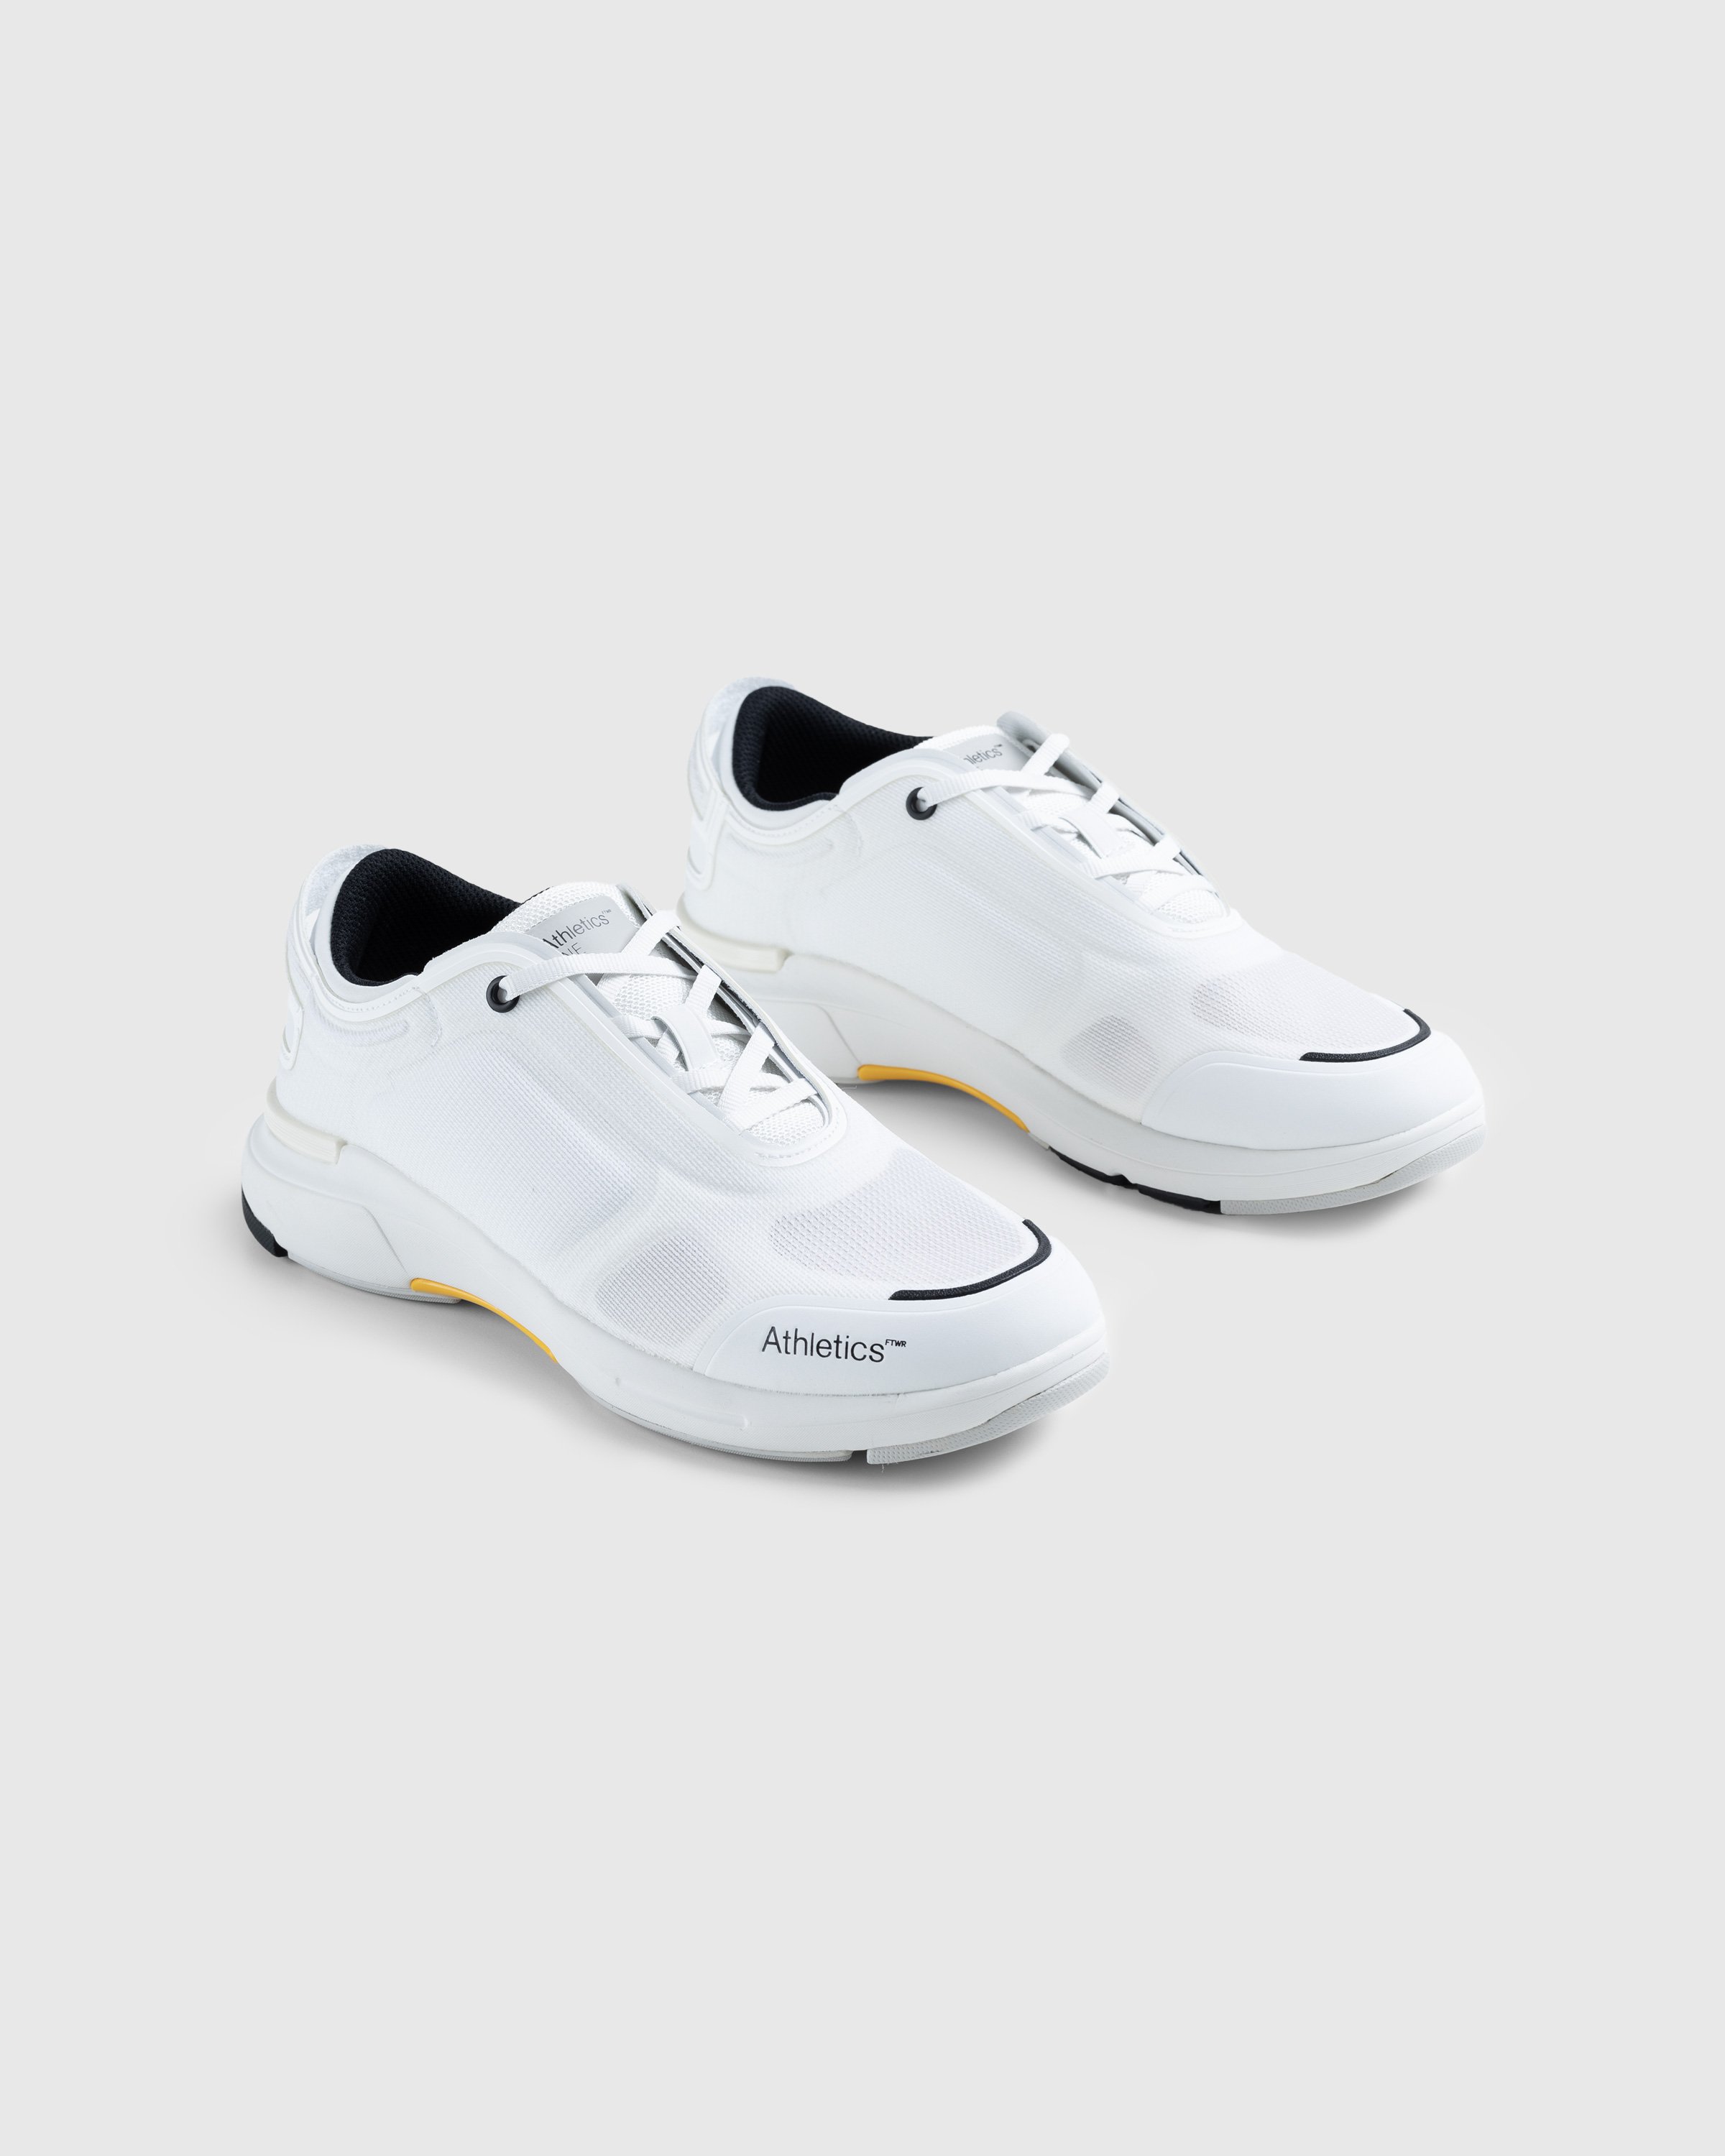 Athletics Footwear - One White - Footwear - White - Image 3